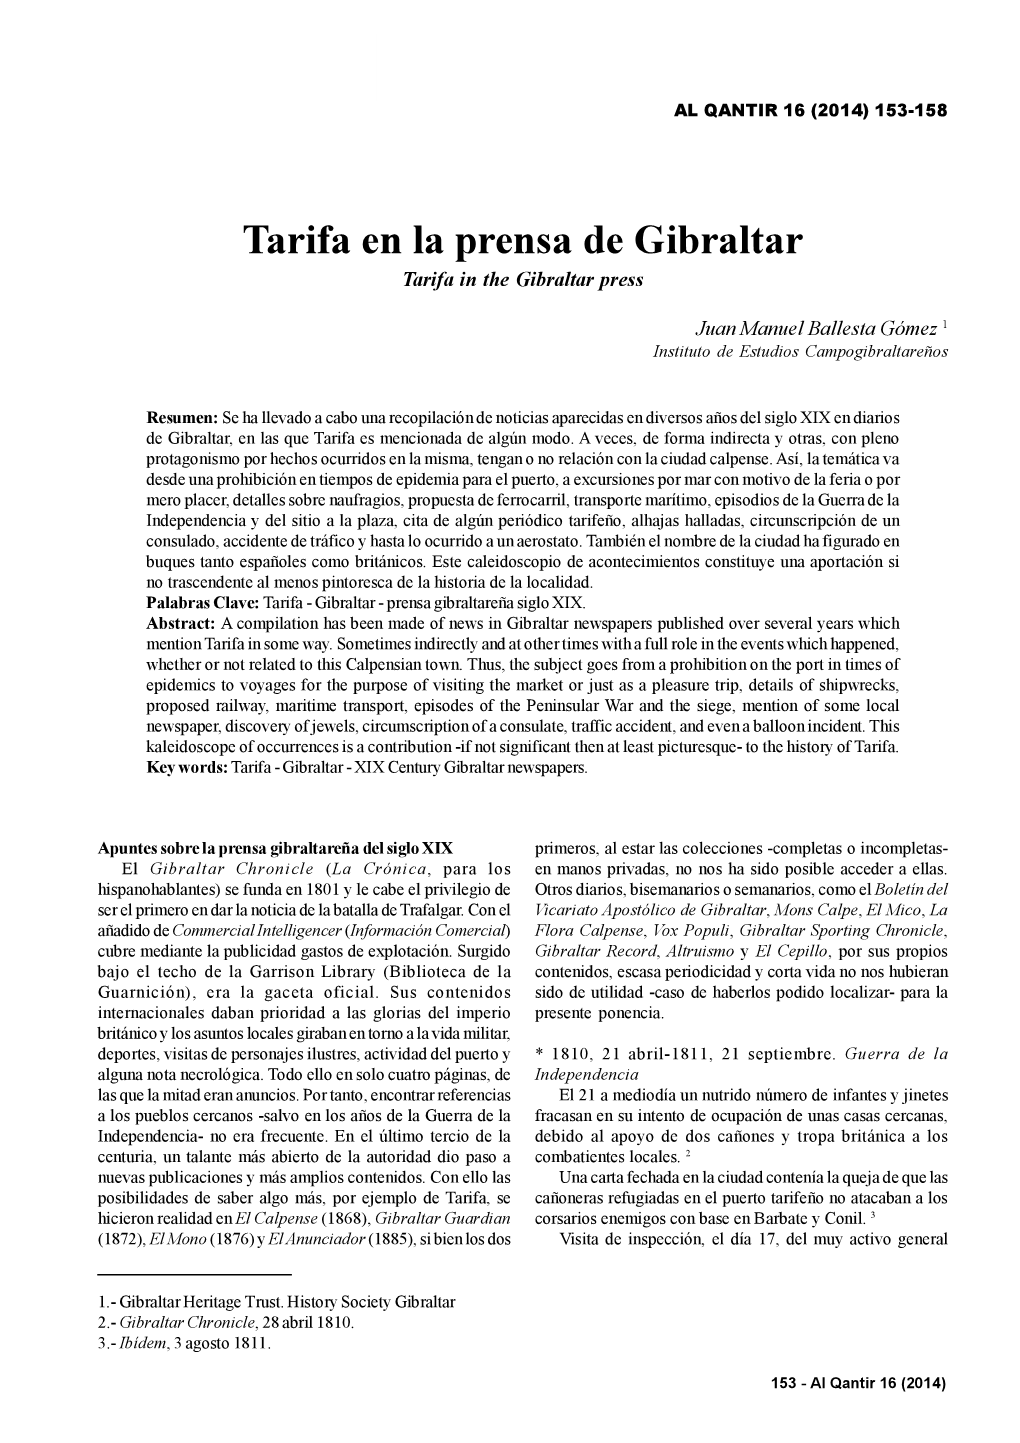 Tarifa En La Prensa De Gibraltar Tarifa in the Gibraltar Press